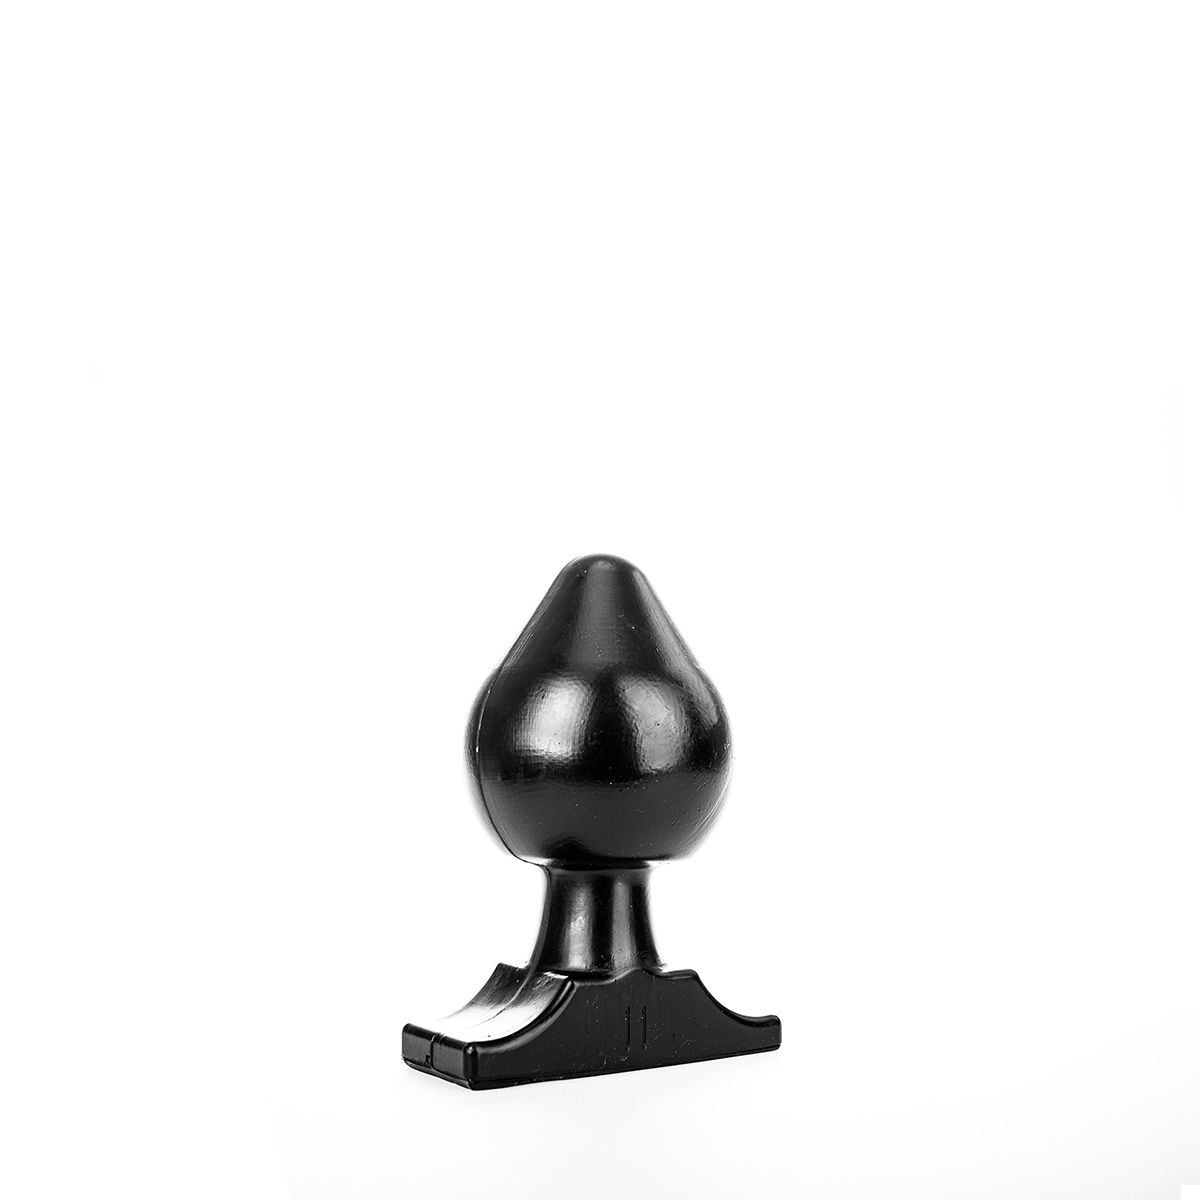 All Black - Buttplug - 19 x 11 cm - Zwart-Erotiekvoordeel.nl